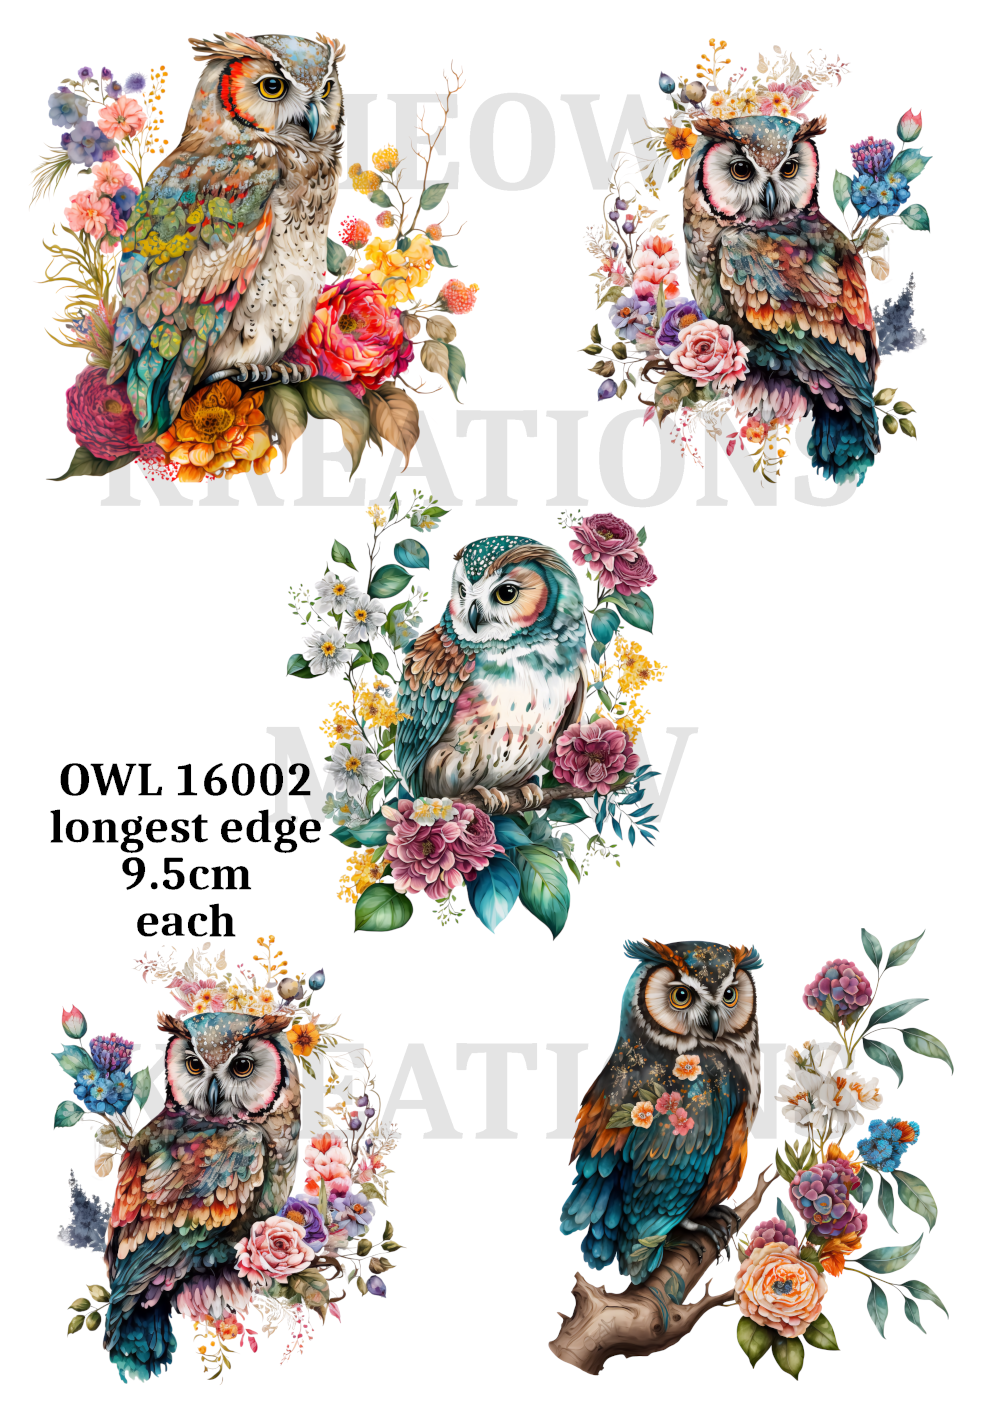 OWL 16002